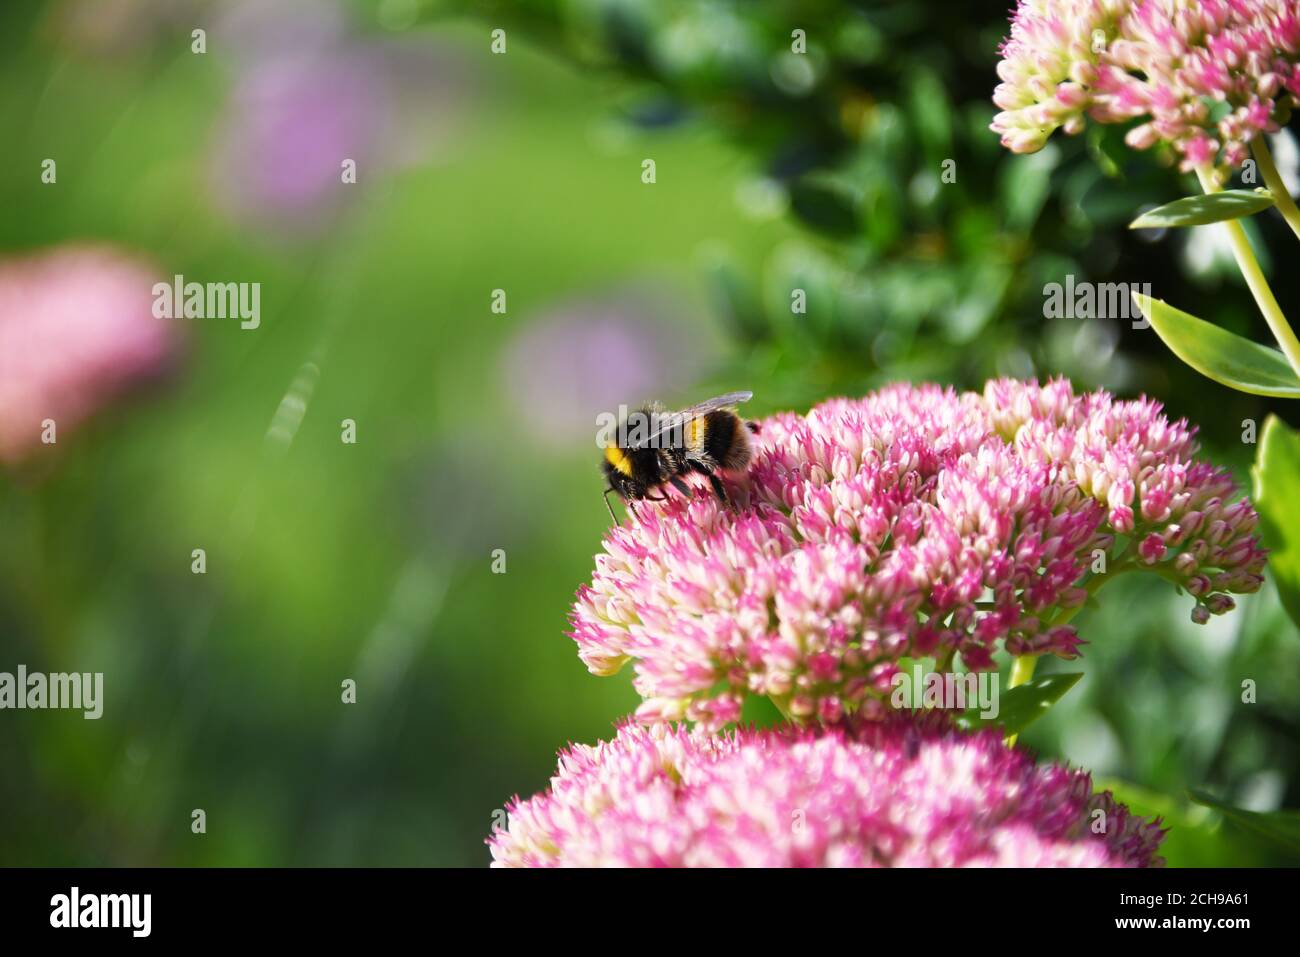 White-tailed Bumblebee (Bombus lucorum) feeding on nectar of a pink flower (Hylotelephium ‘Autumn Joy’). Photograped in a Wiltshire garden. Stock Photo